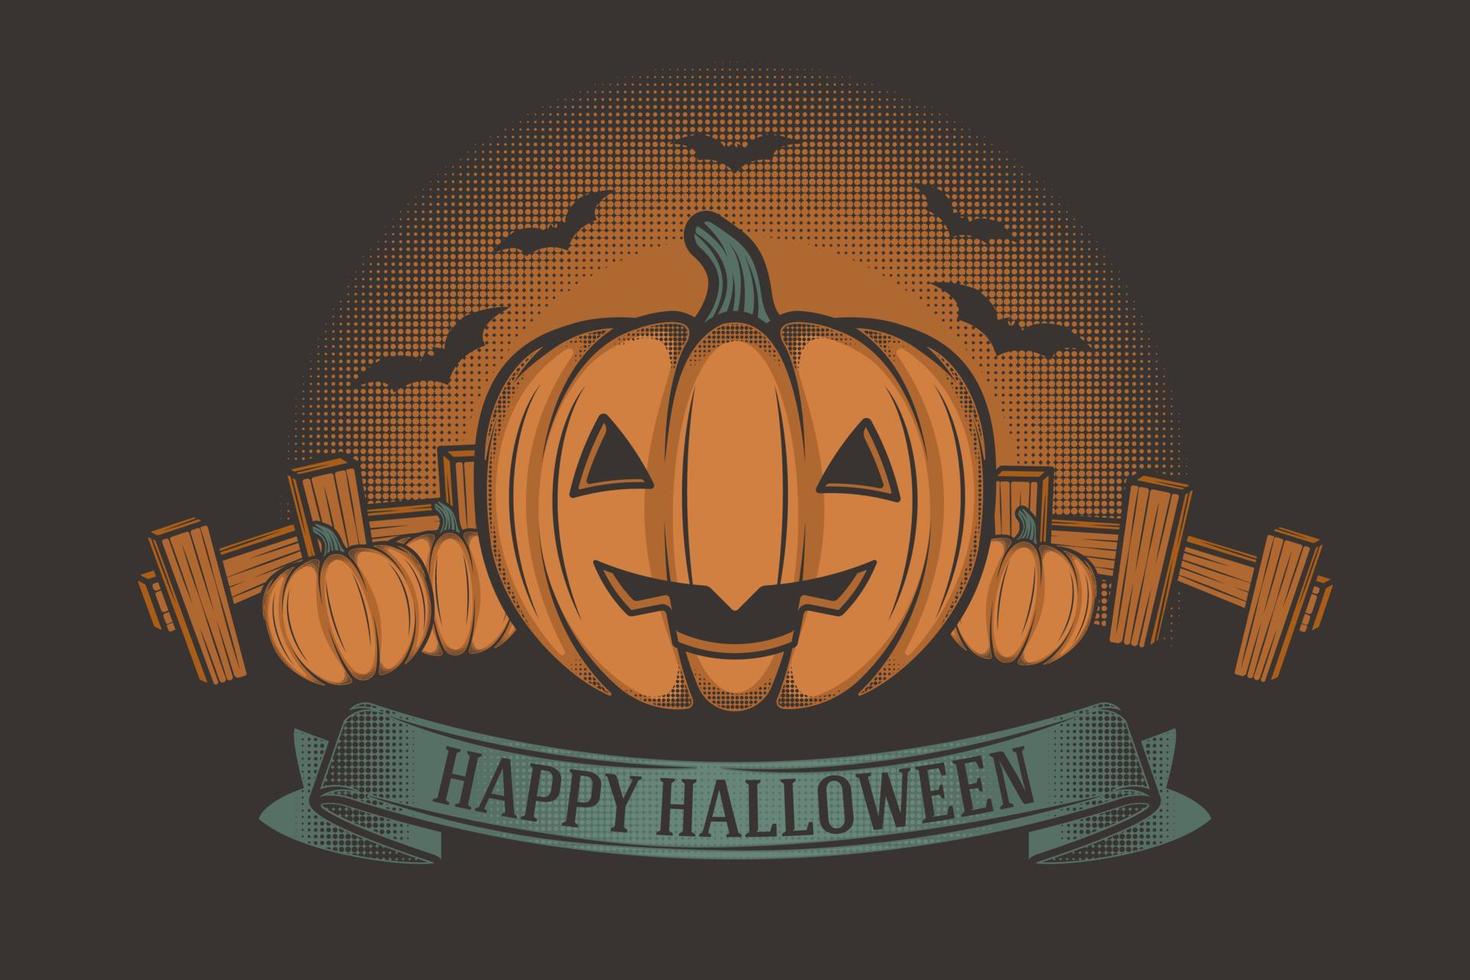 Retro Pumpkin Halloween Jack O Lantern vector